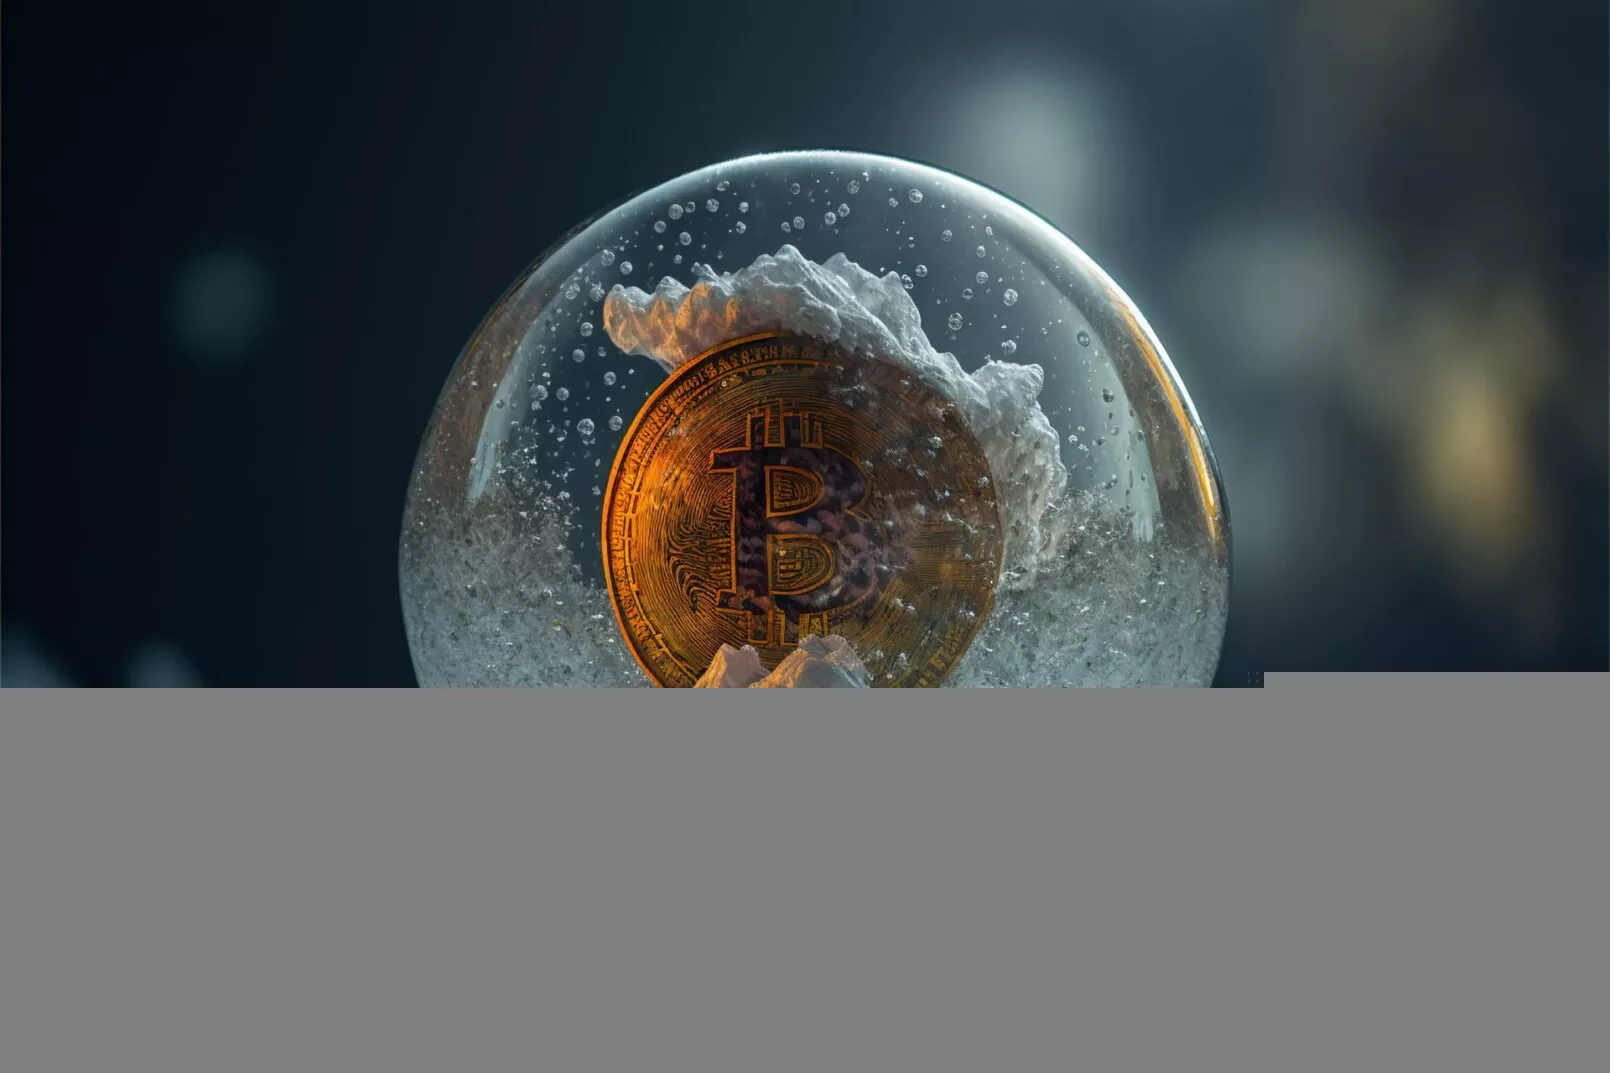 Bitcoin snowglobe, Crypto winter